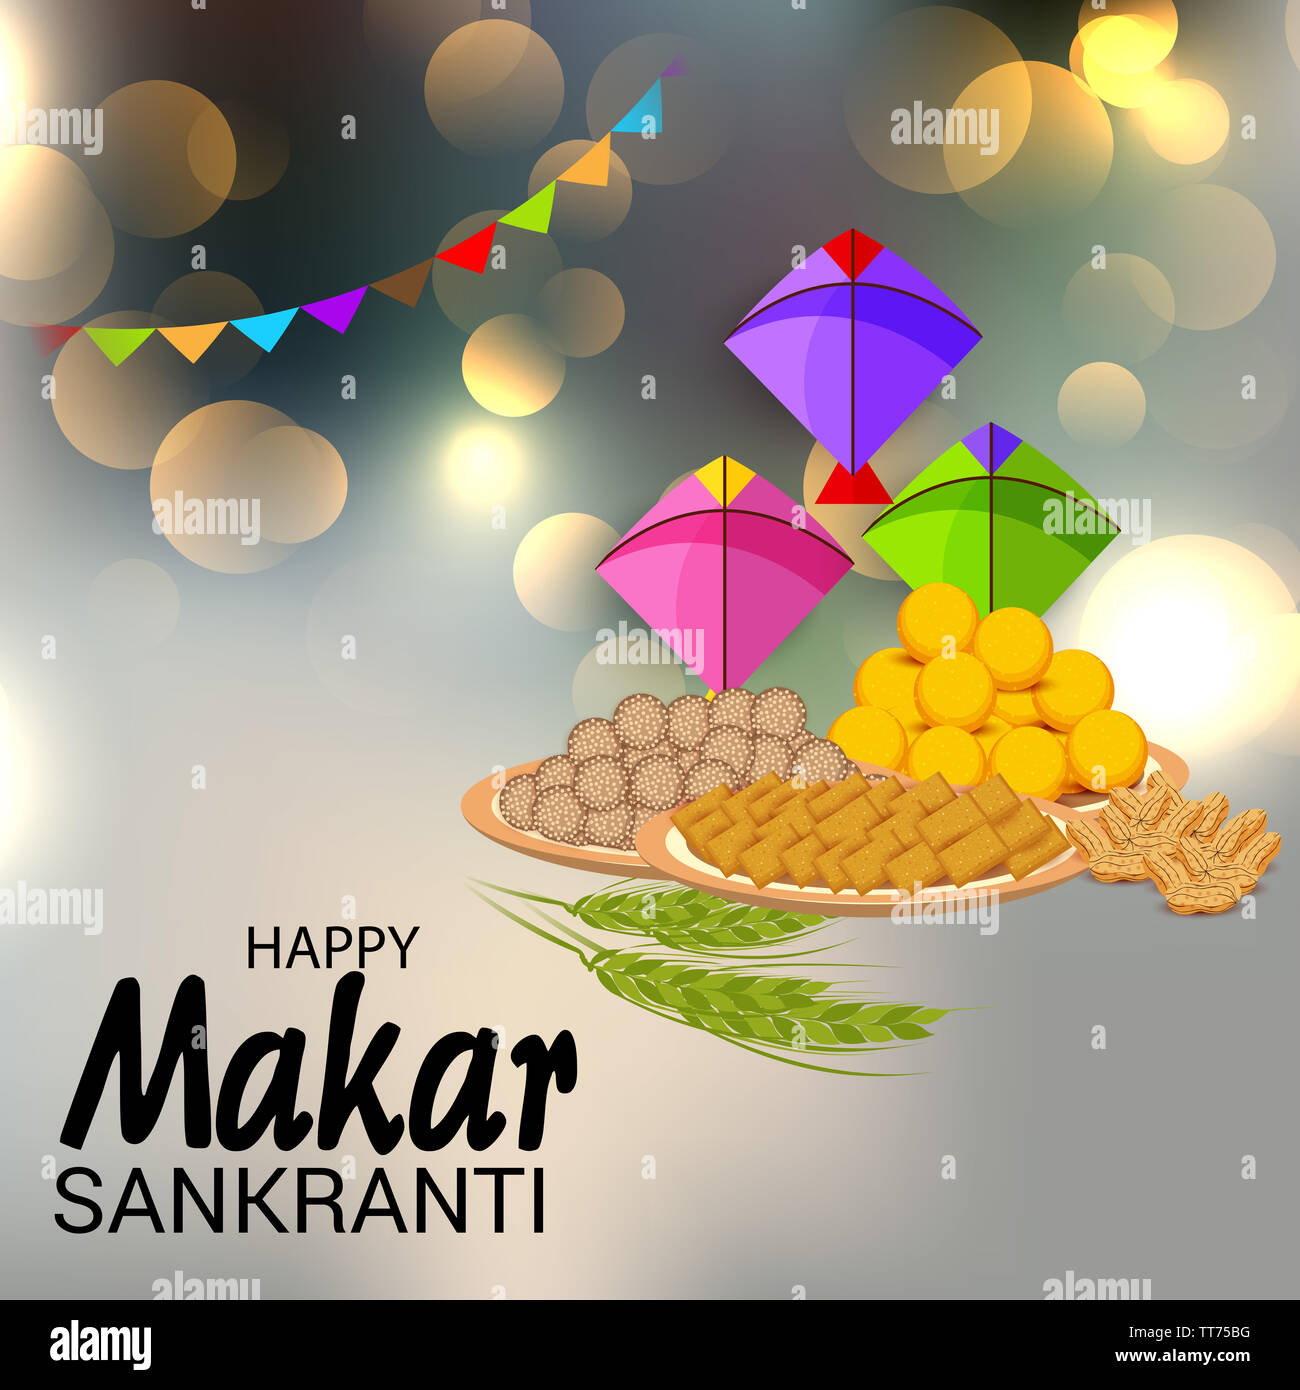 illustration of a background for Happy Makar Sankranti Stock Photo ...